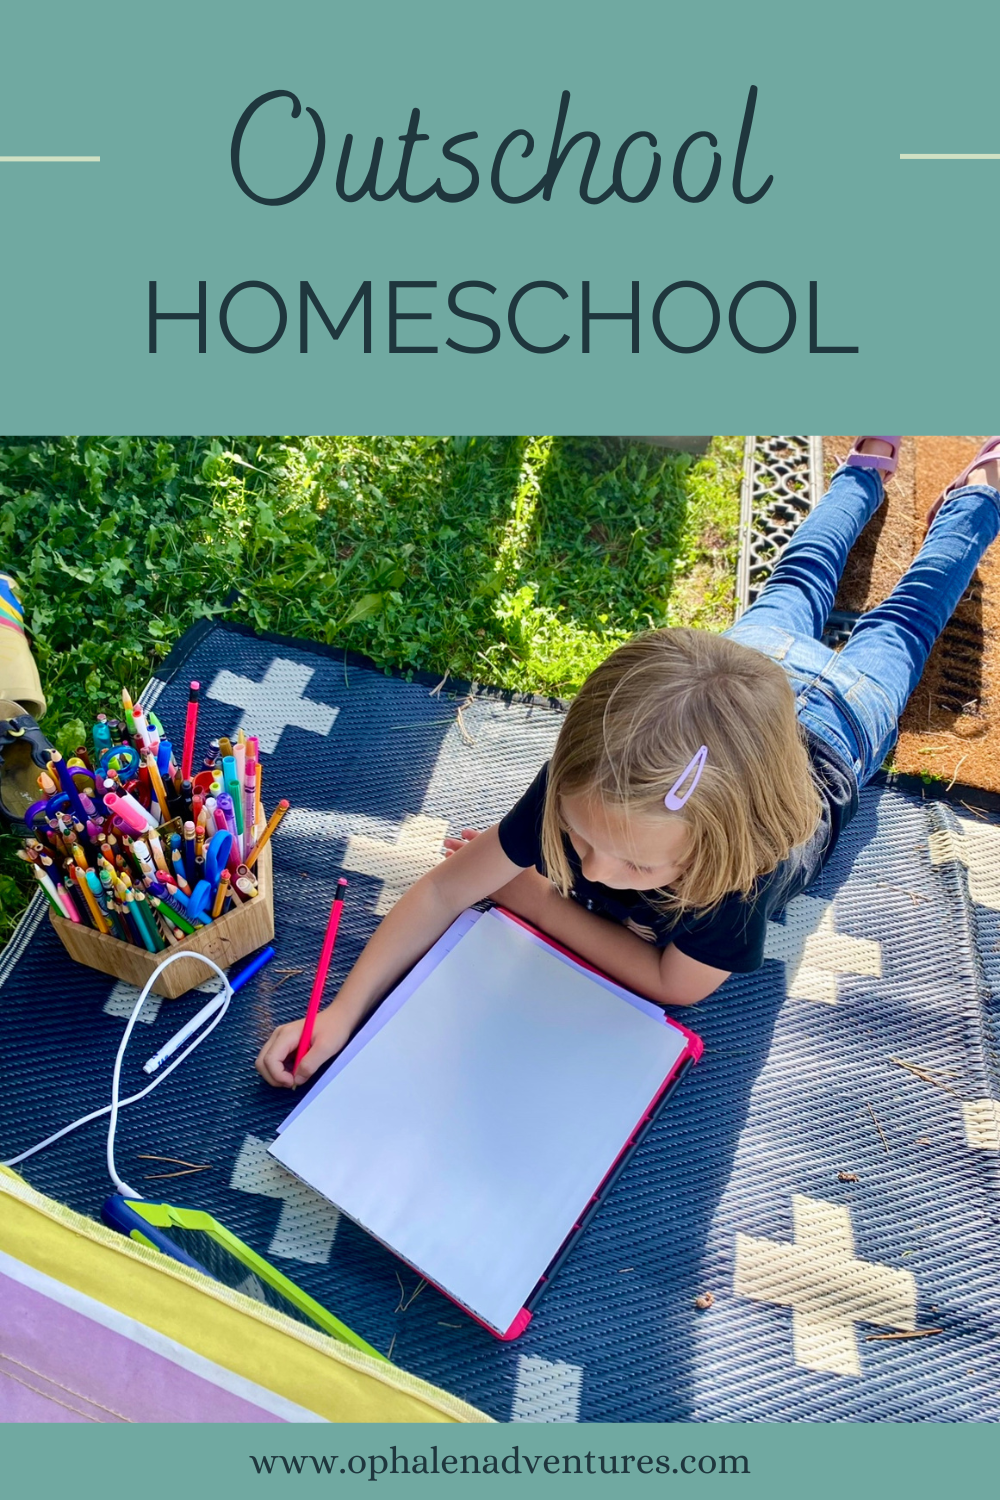 Outschool homeschool class outside on an ipad | O'Phalen Adventures